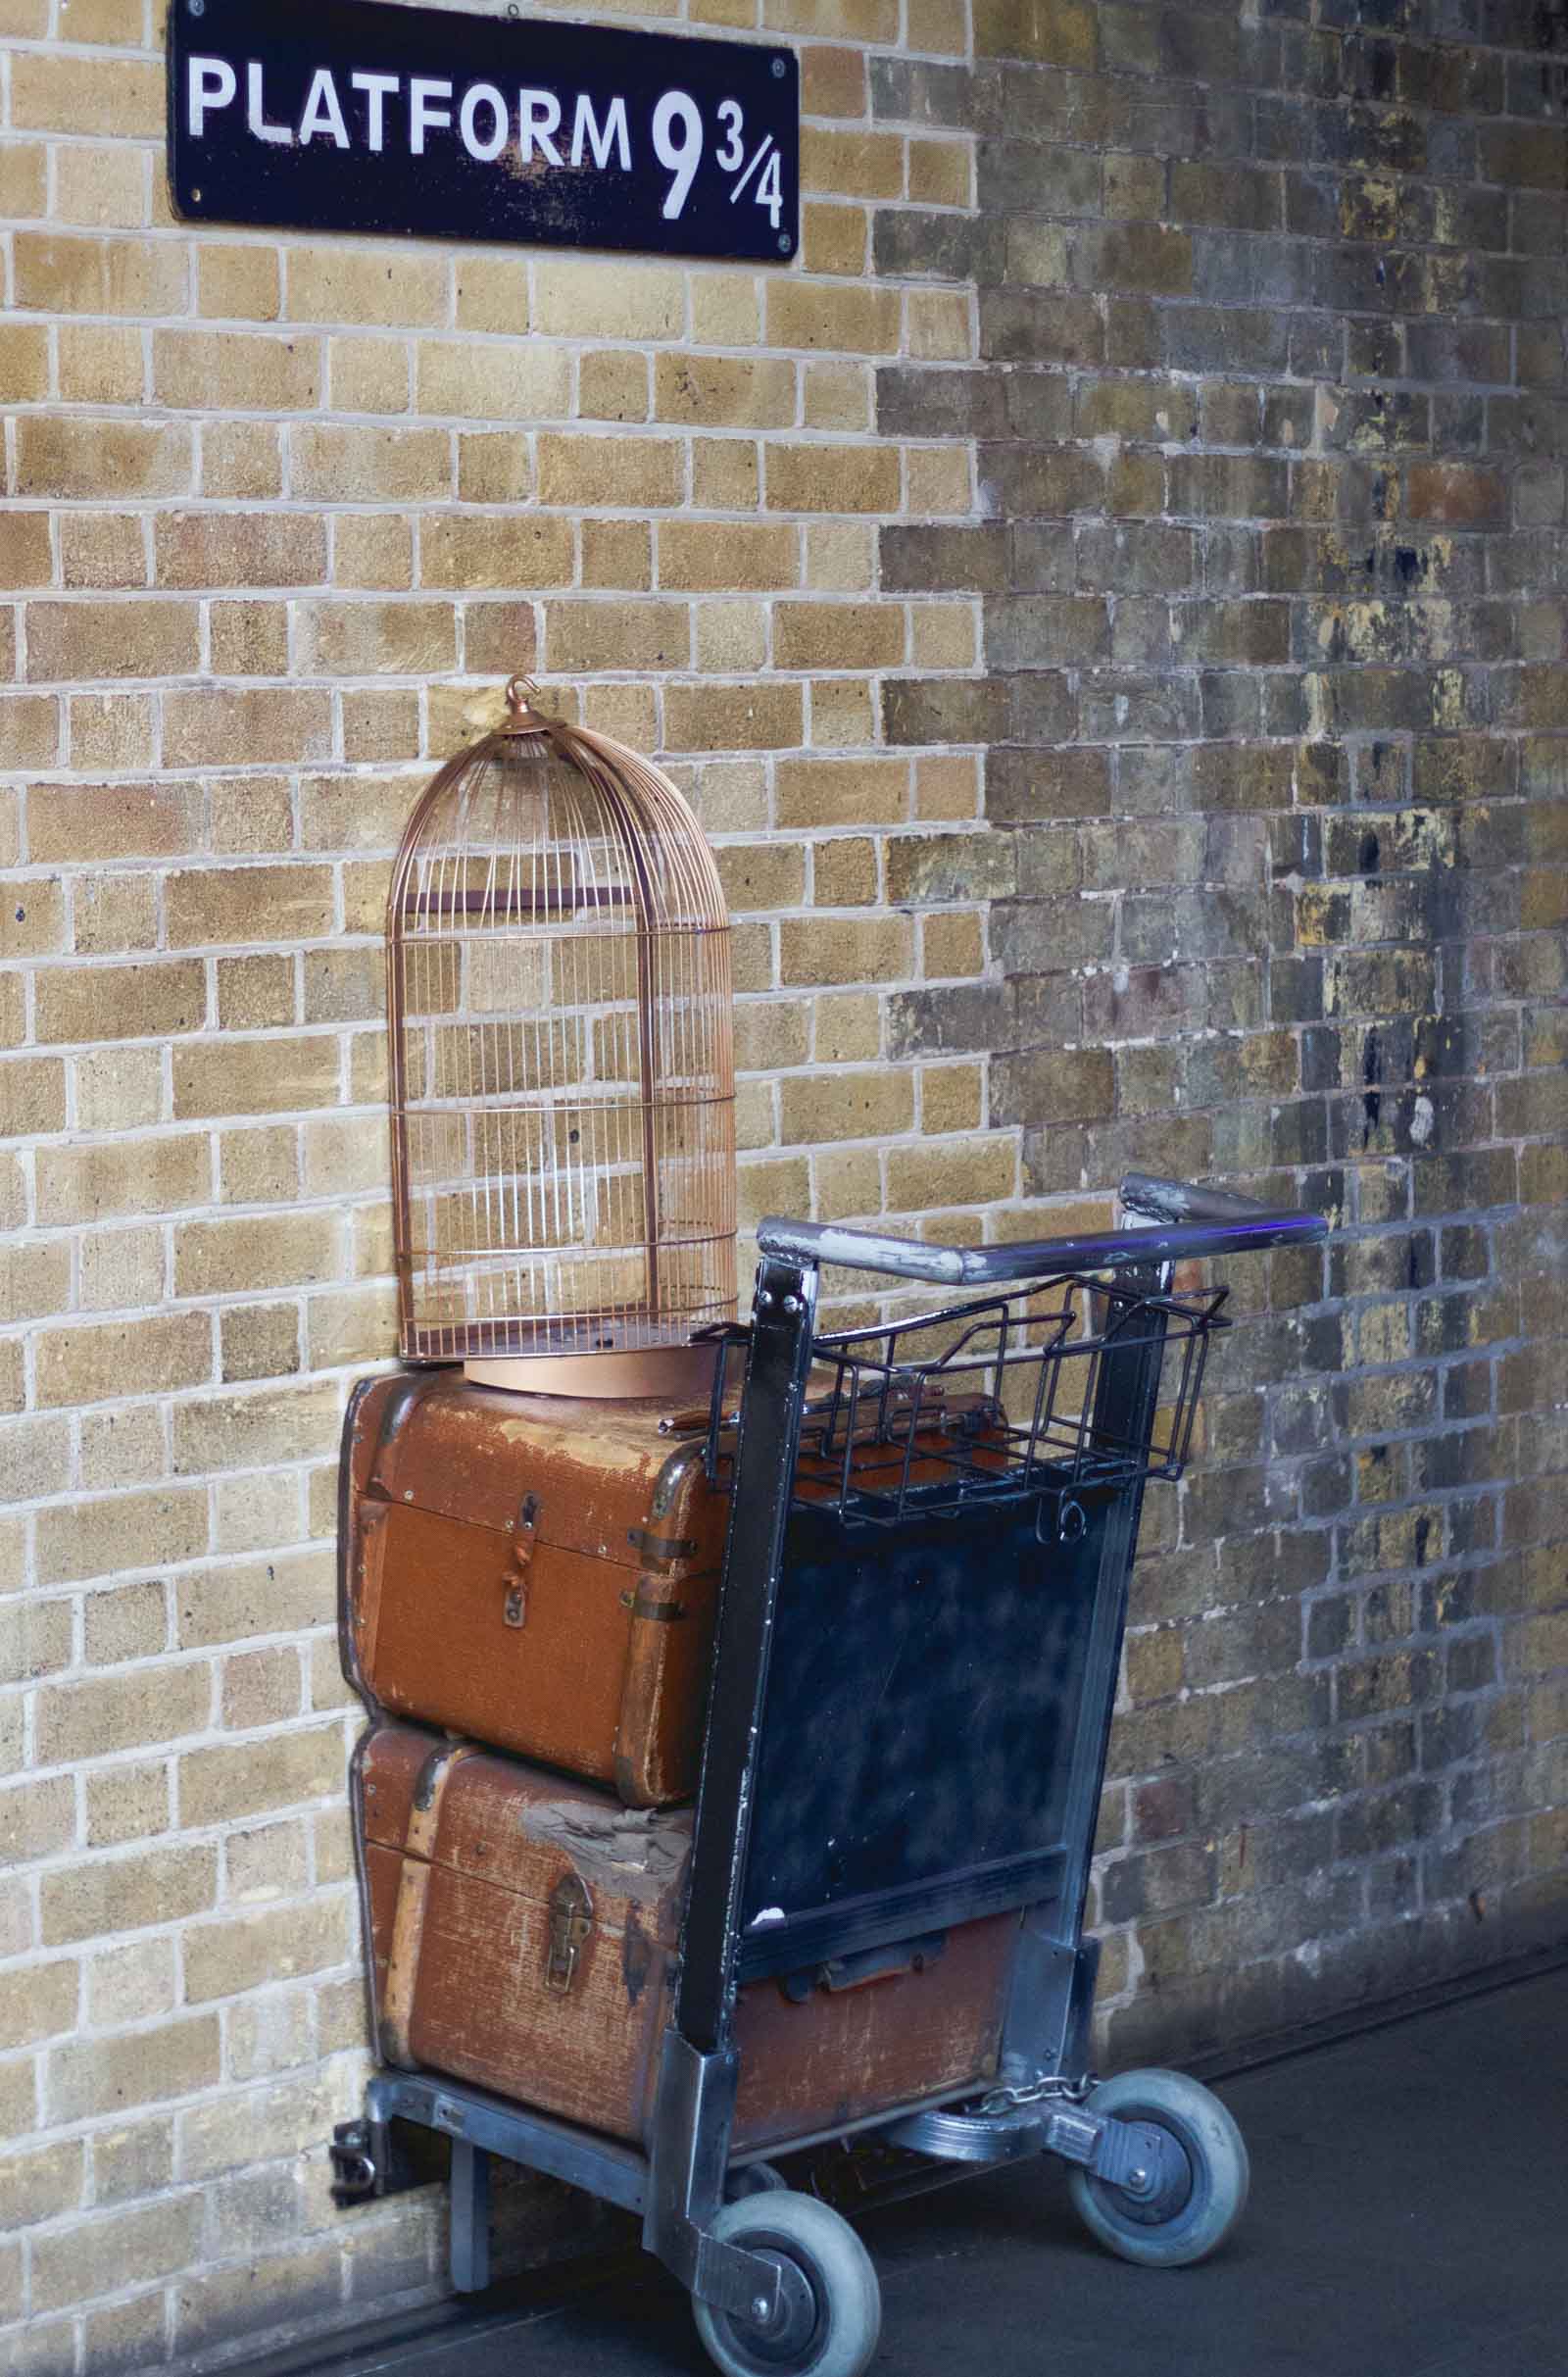 platform 9 3/4 kings cross station London Harry Potter